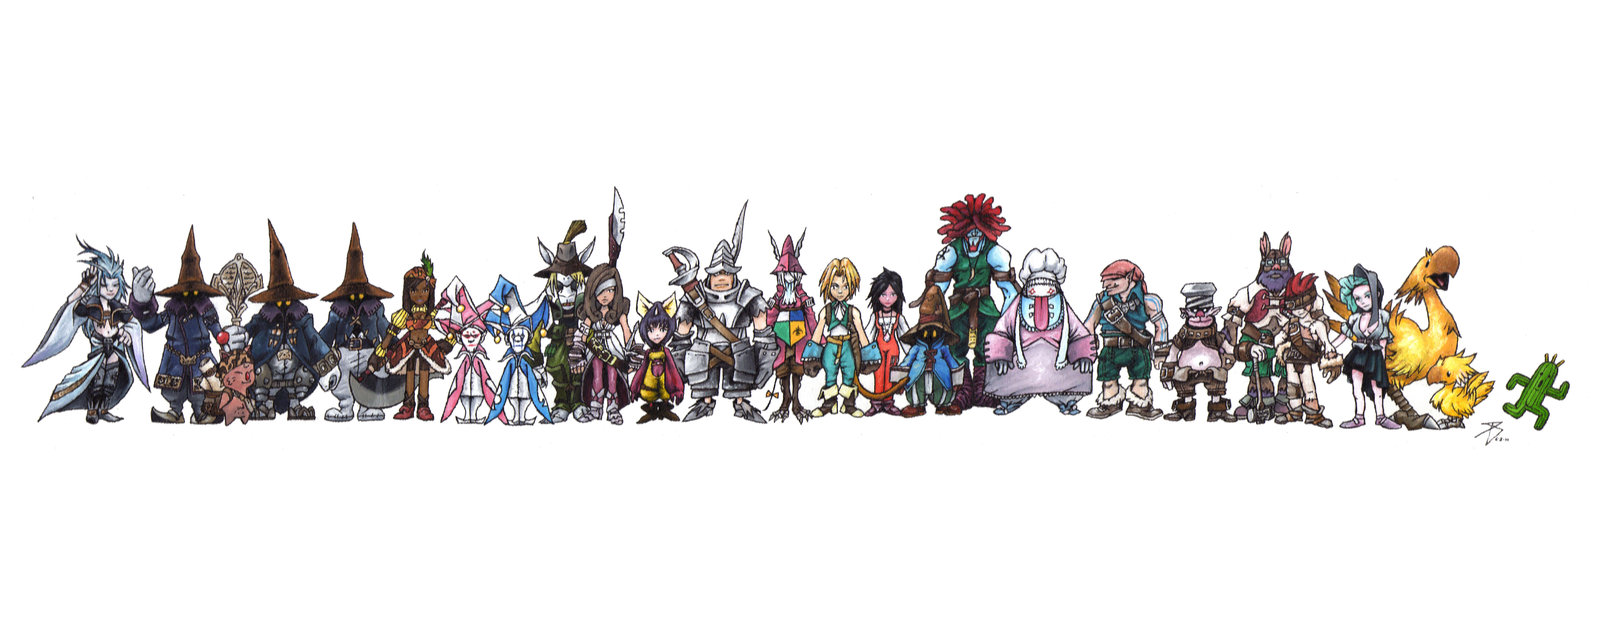 Most Viewed Final Fantasy Ix Wallpapers 4k Wallpapers